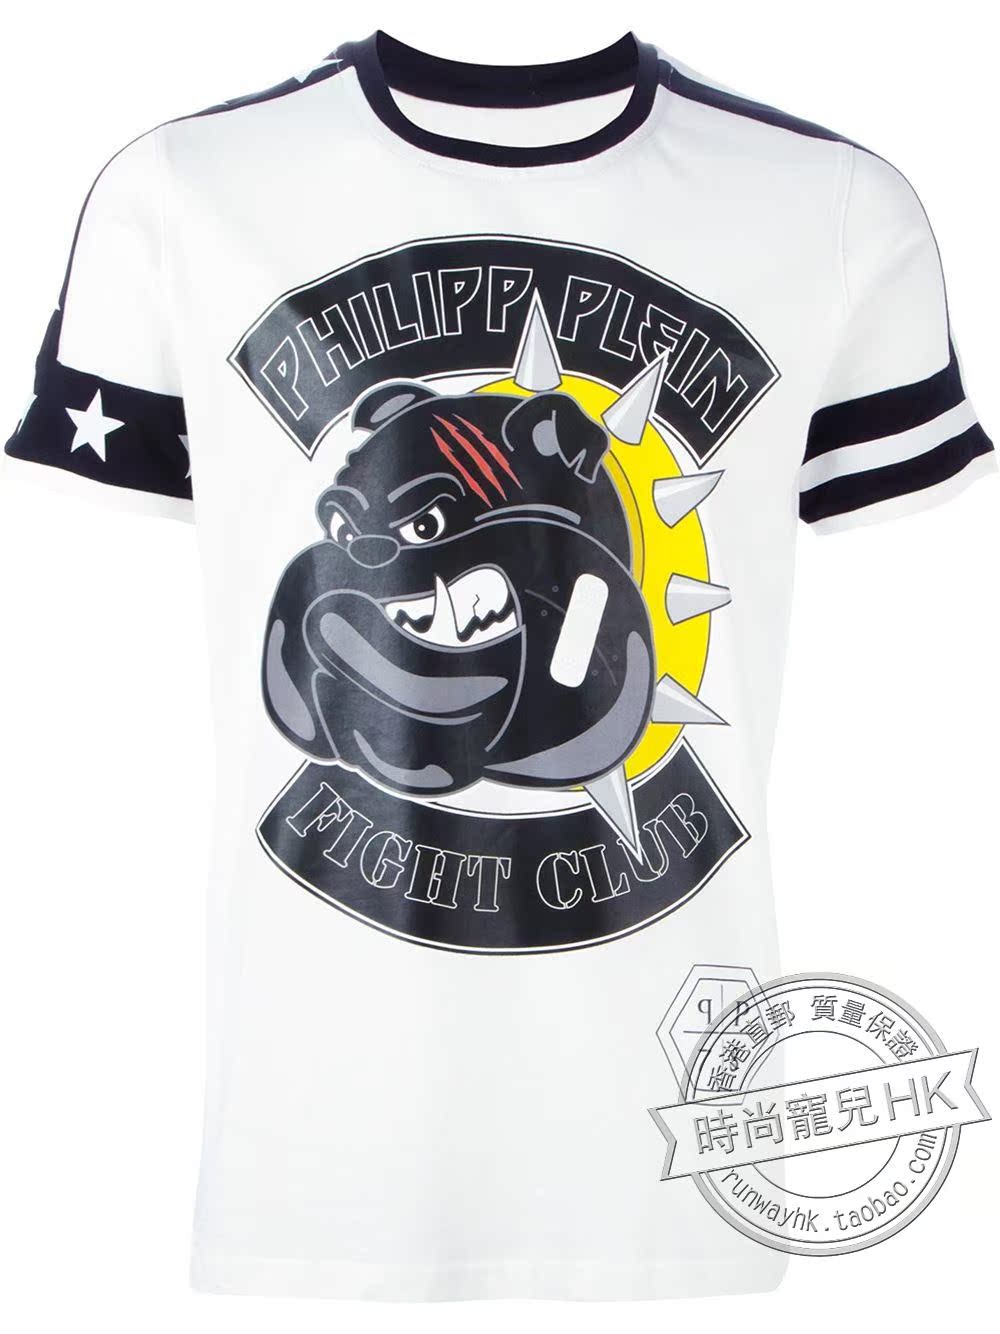 Спортивная футболка Philipp plein HK 15 Kill The Beast